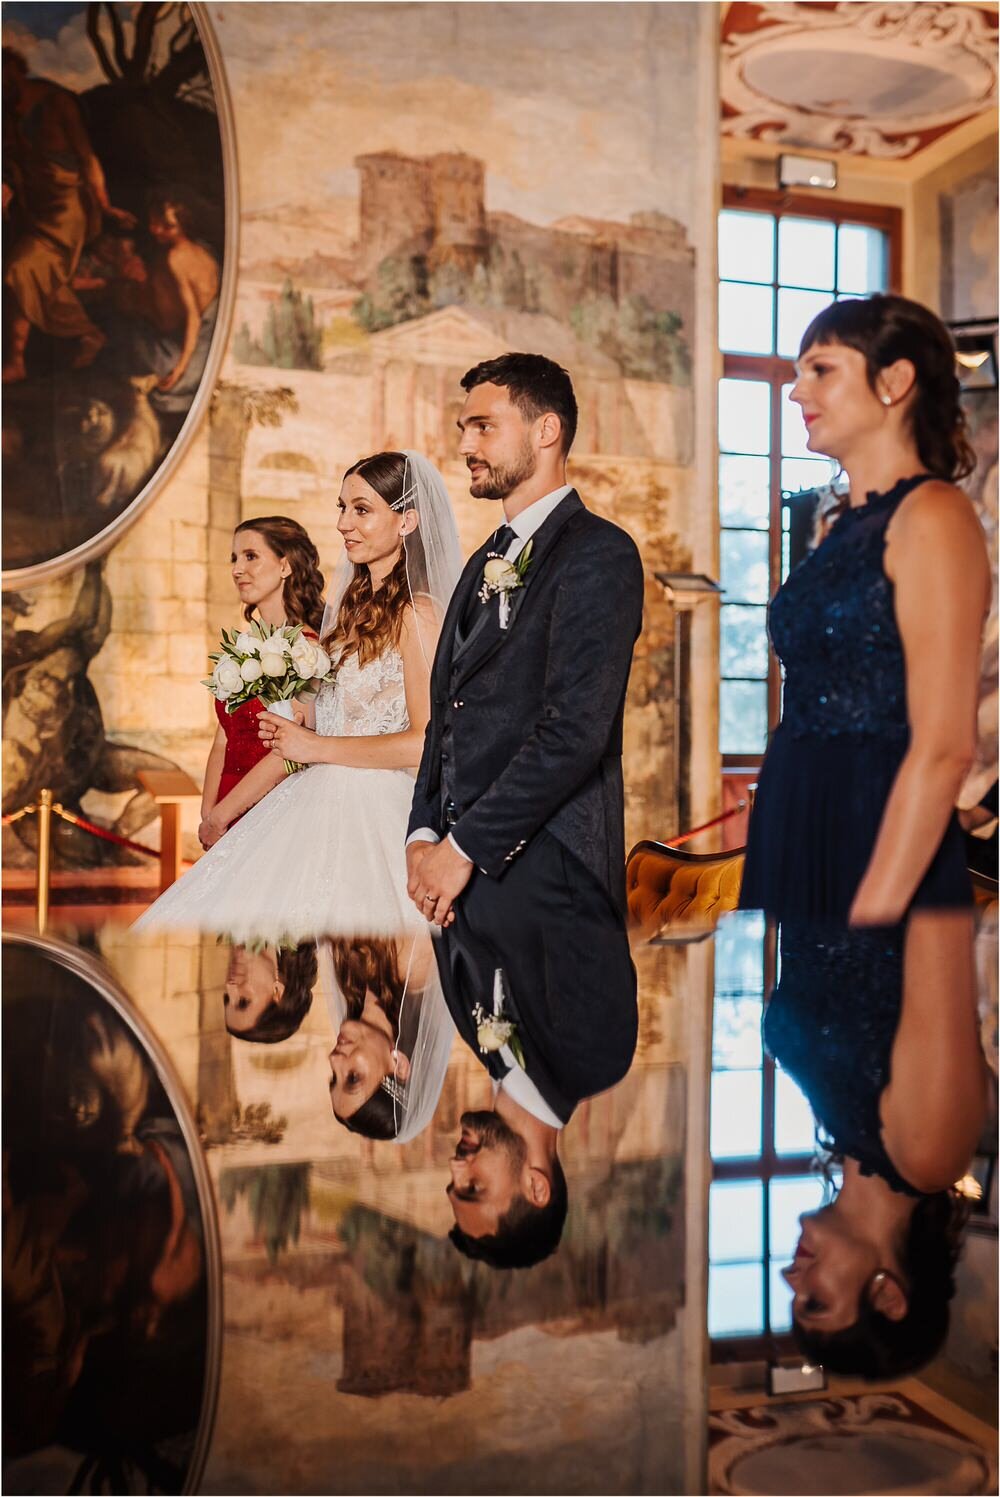 best of wedding photography 2019 photographer italy ireland tuscany santorini greece spain barcelona lake como chateux scotland destination wedding 0047.jpg